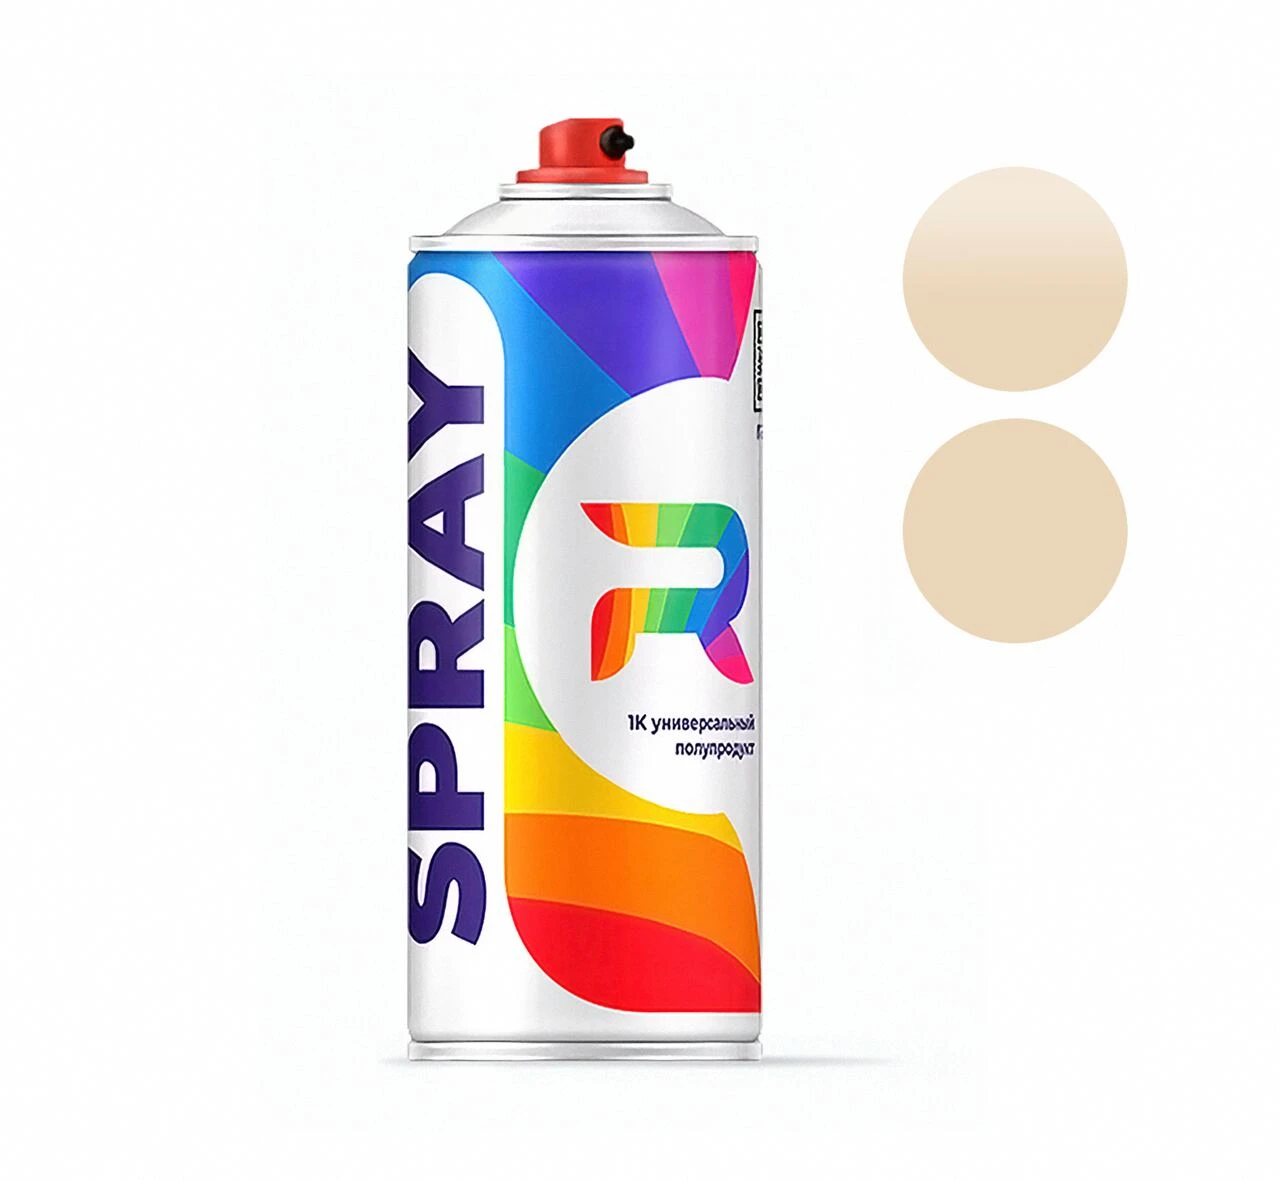 Depósito de Spray para Toyota 4h3 beige, 520 ml, pintura acrílica, marrón| Pintura en espray| - AliExpress